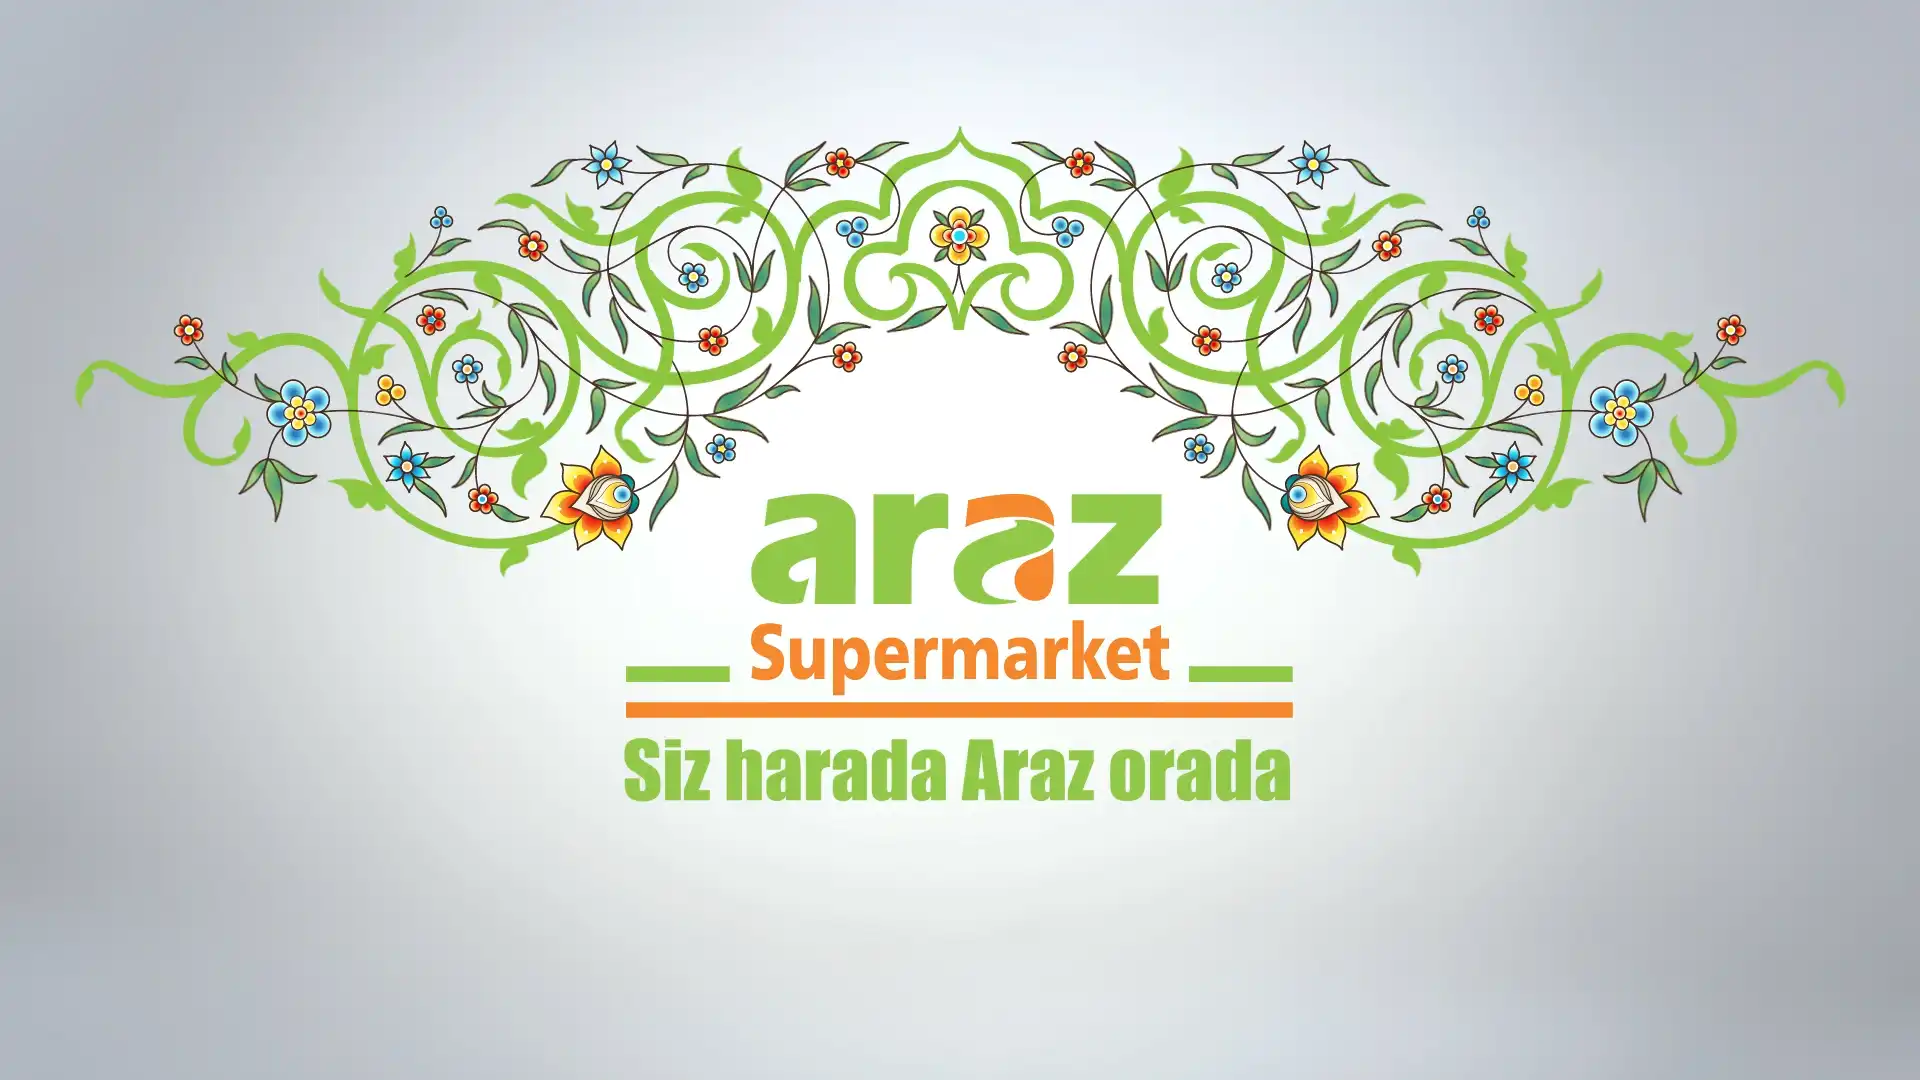 Araz supermarket – Bu Novruzda da, siz harada, “Araz” orada